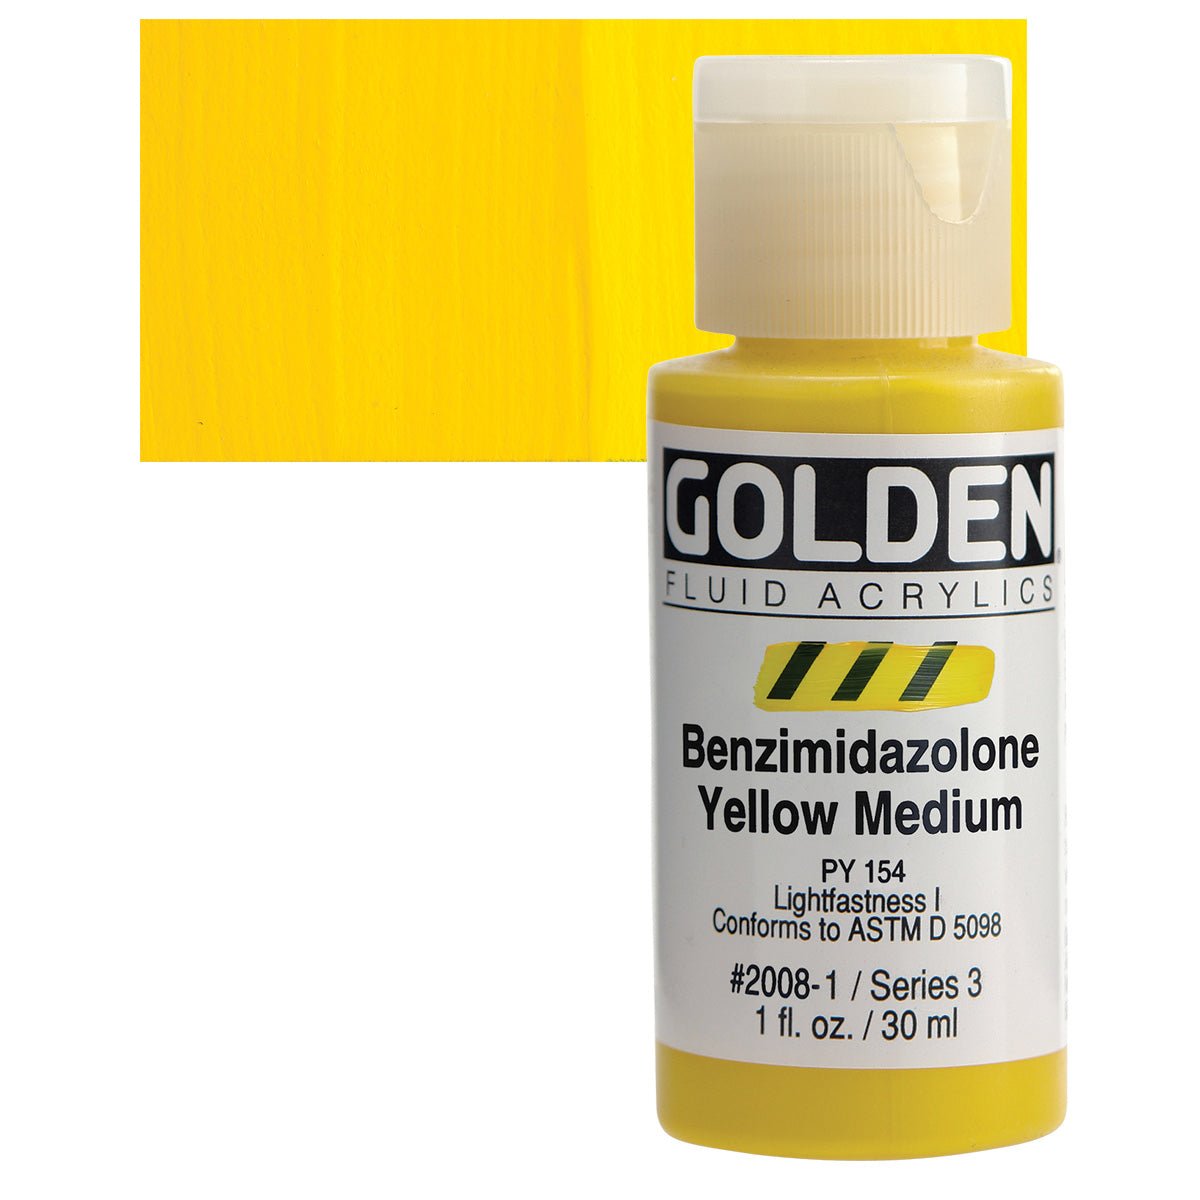 Golden Fluid Acrylics - Benzimidazolone Yellow Medium - 30ml - Create A Little Magic (Pty) Ltd